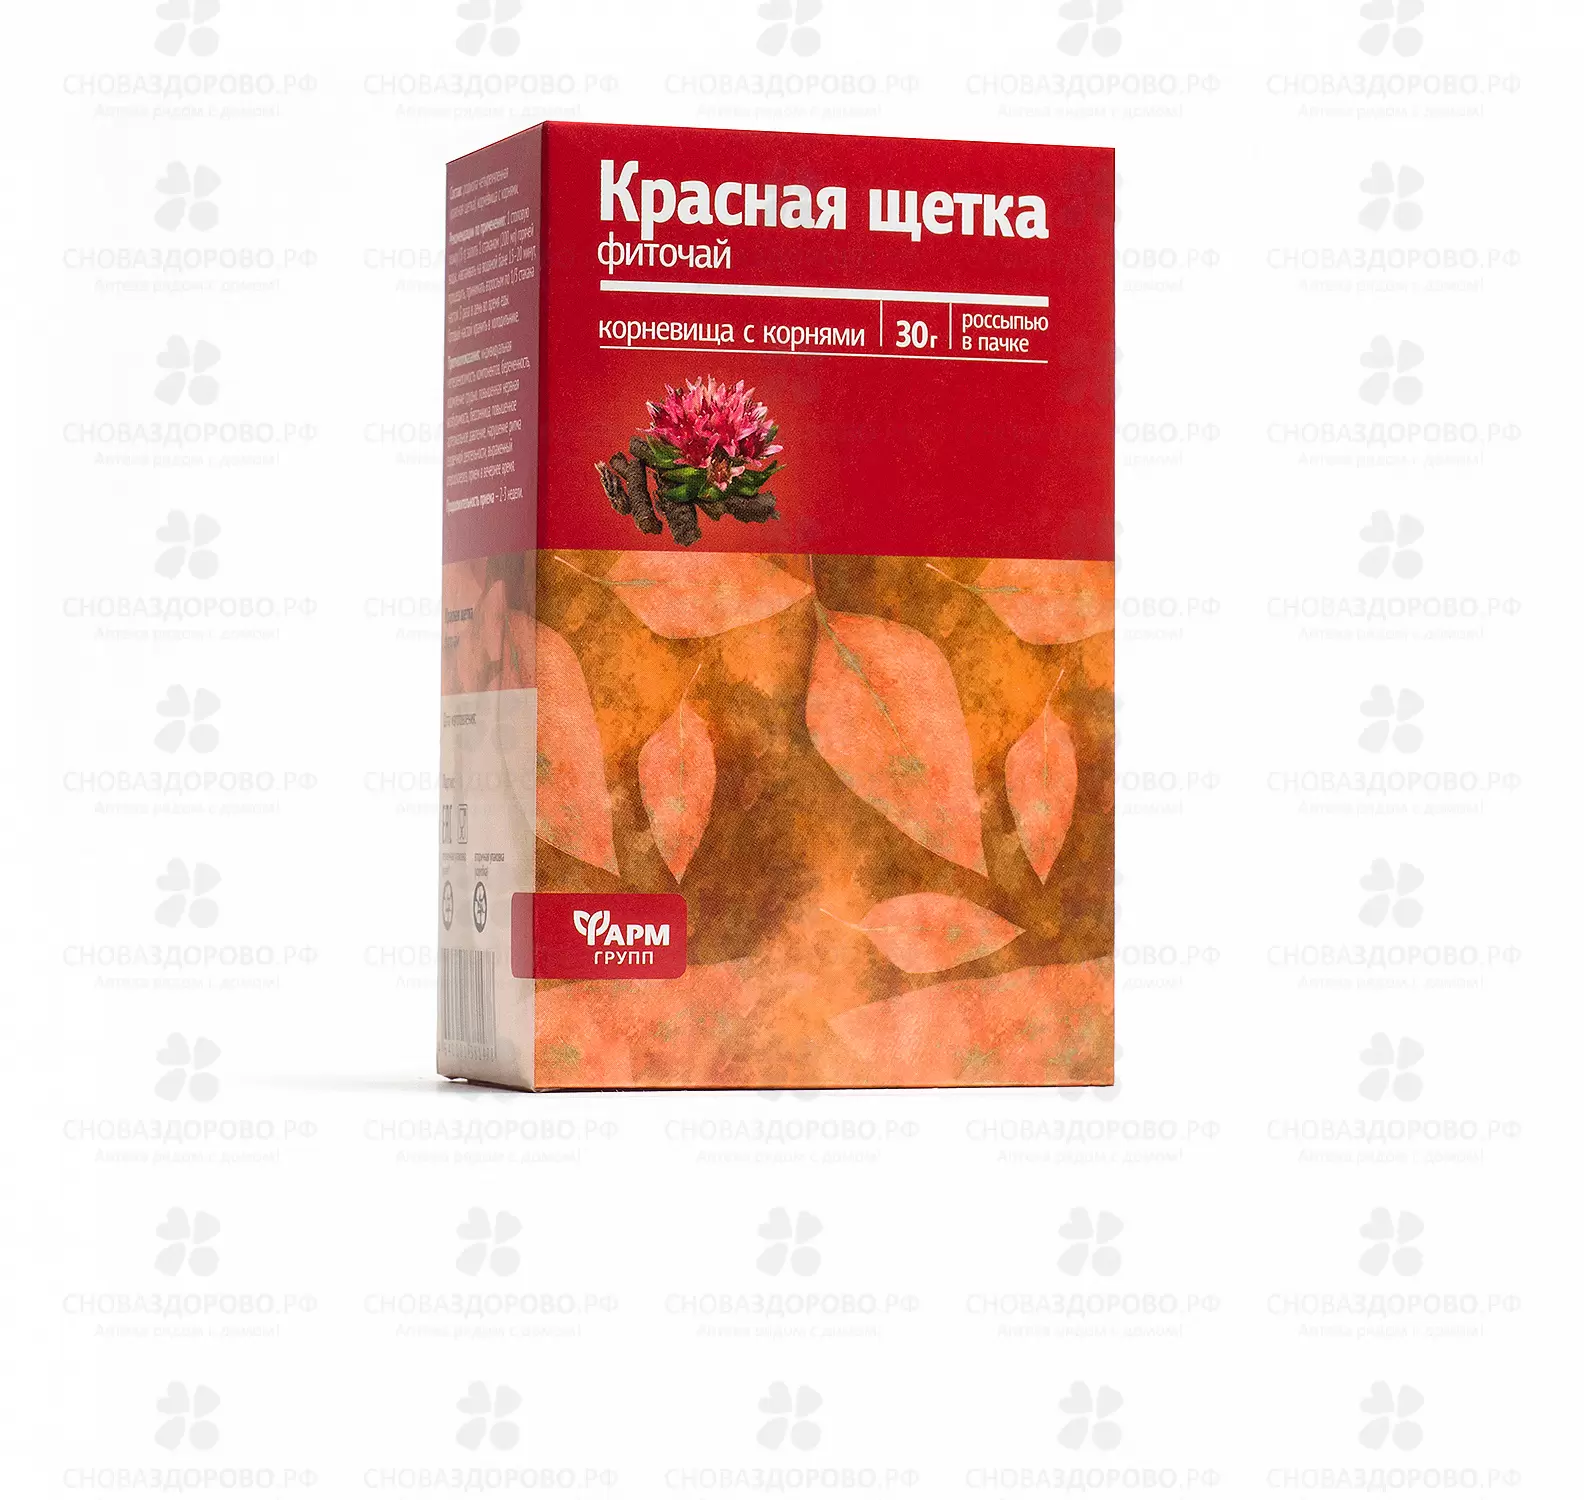 Красная щетка (корневища с корнями) 30г (БАД) ✅ 16032/07015 | Сноваздорово.рф